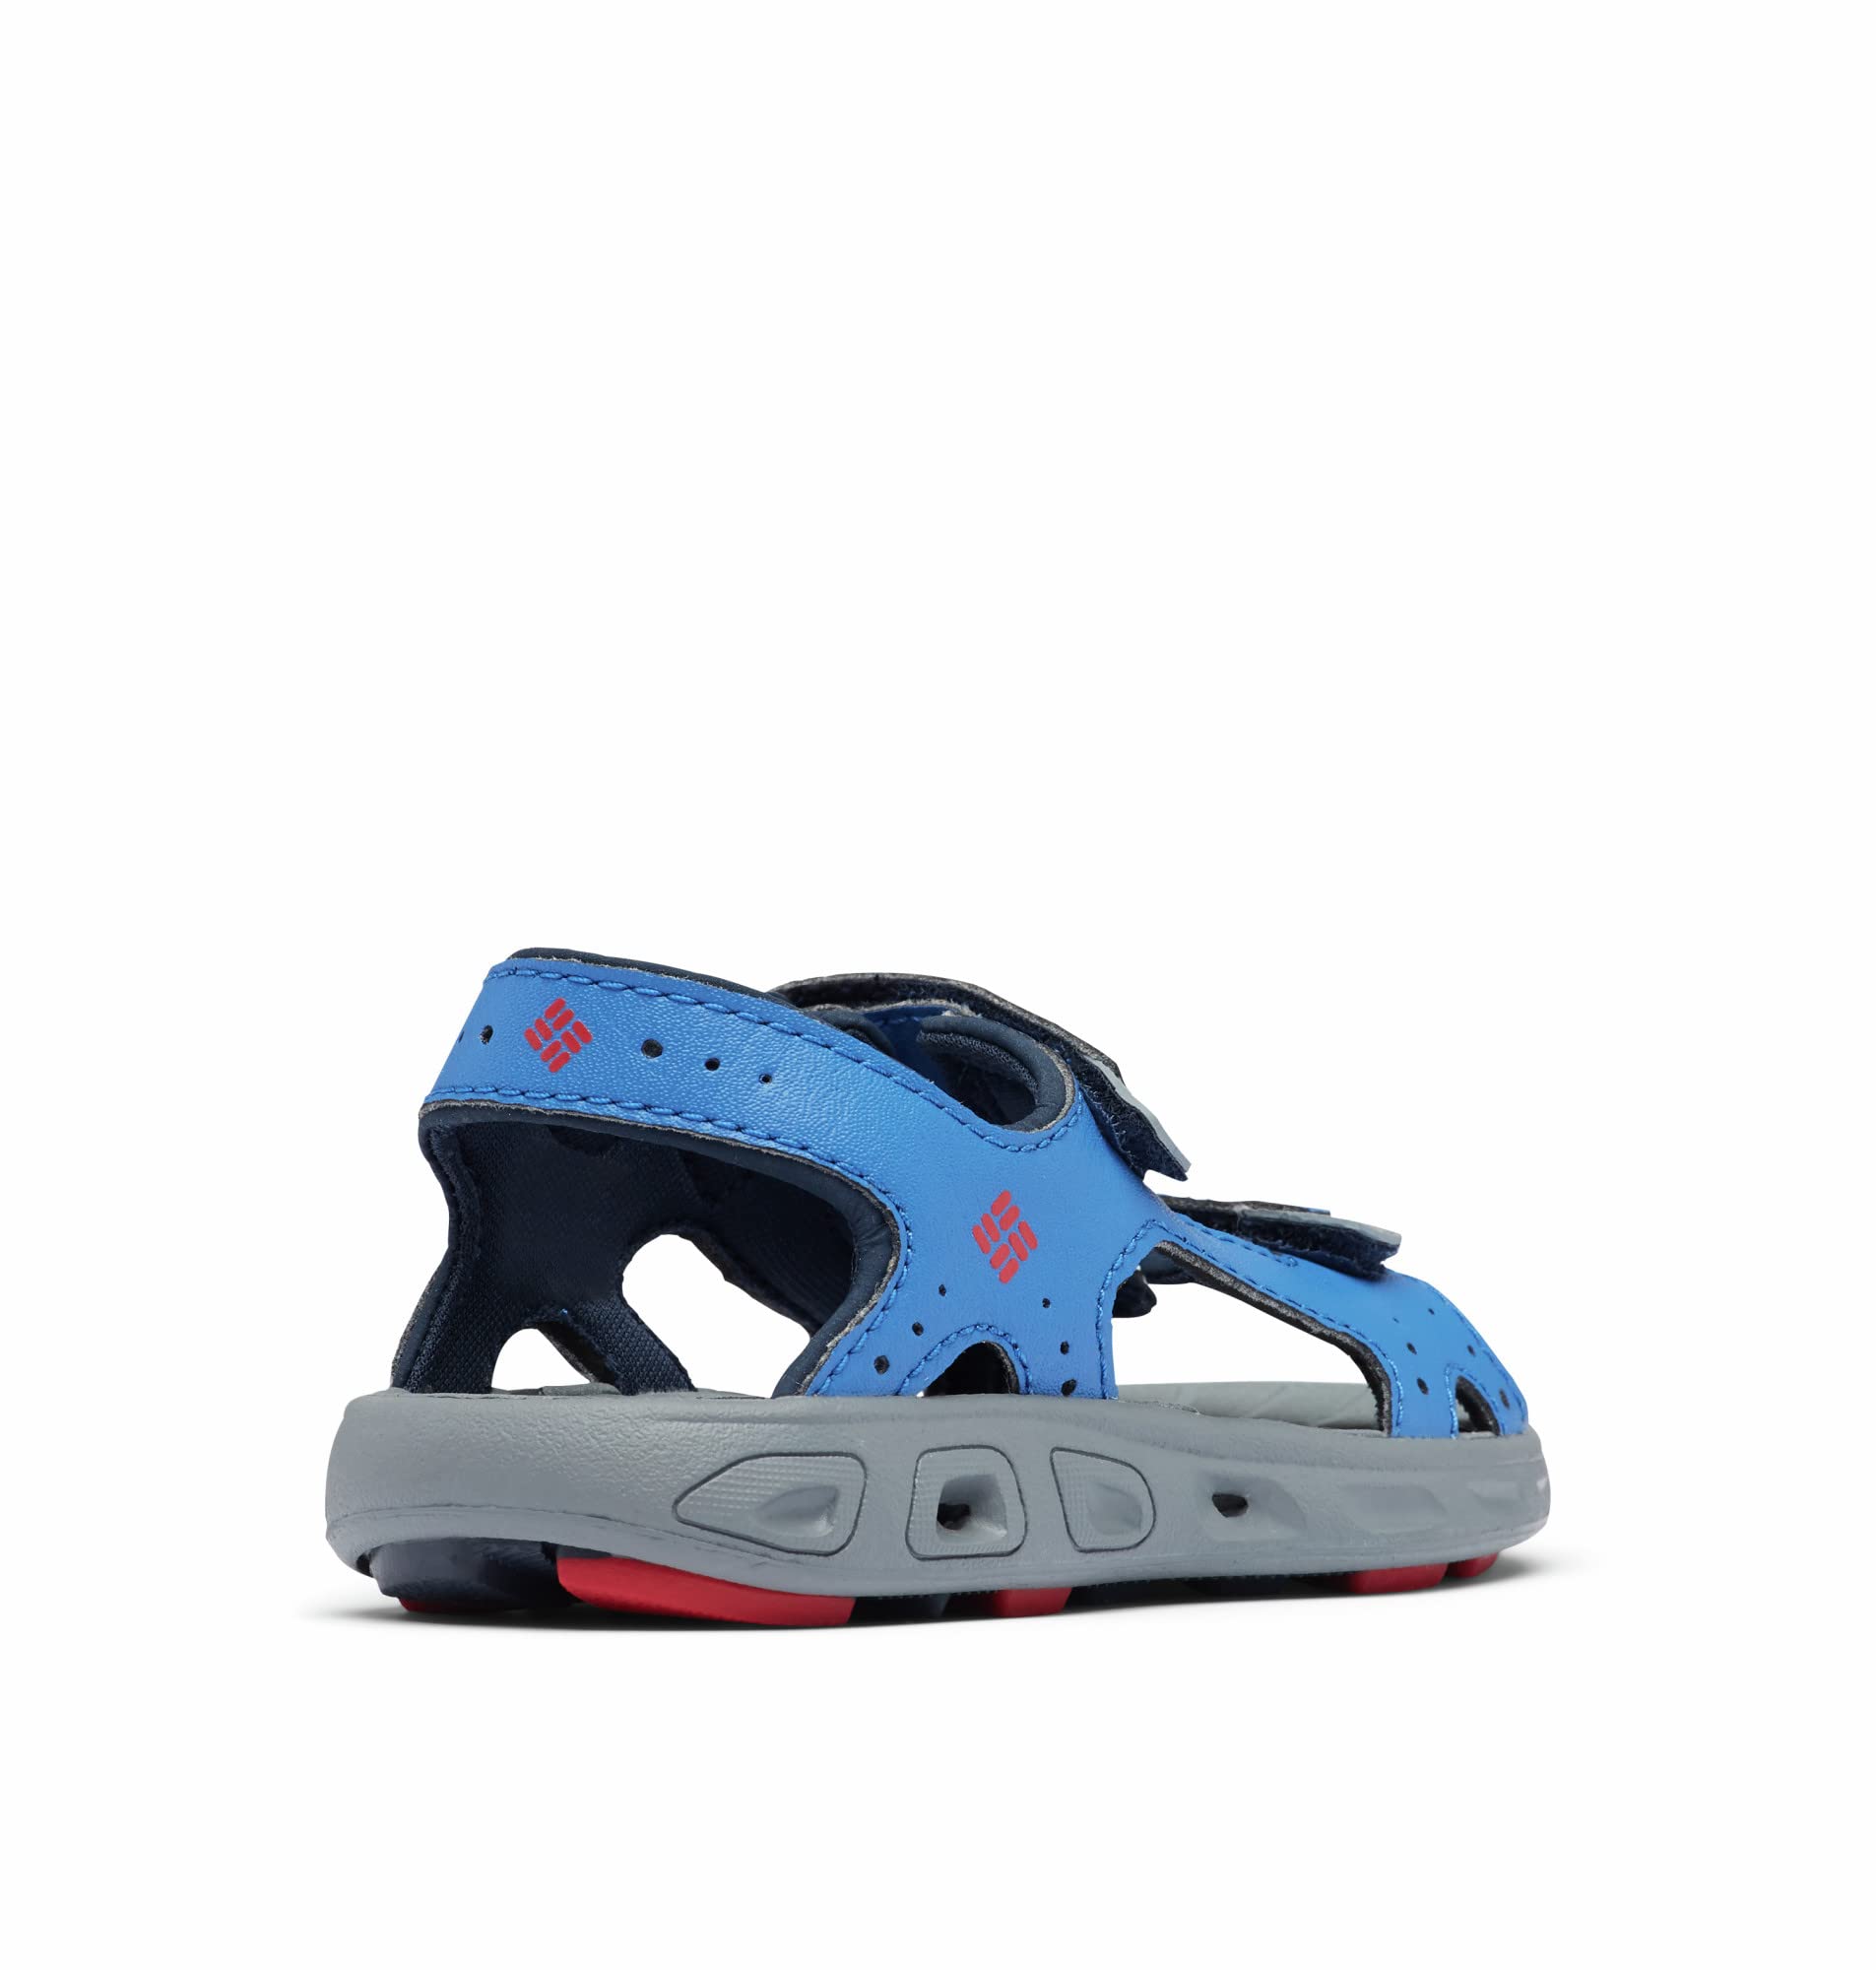 Columbia Unisex-Child Techsun Vent Sport Sandal